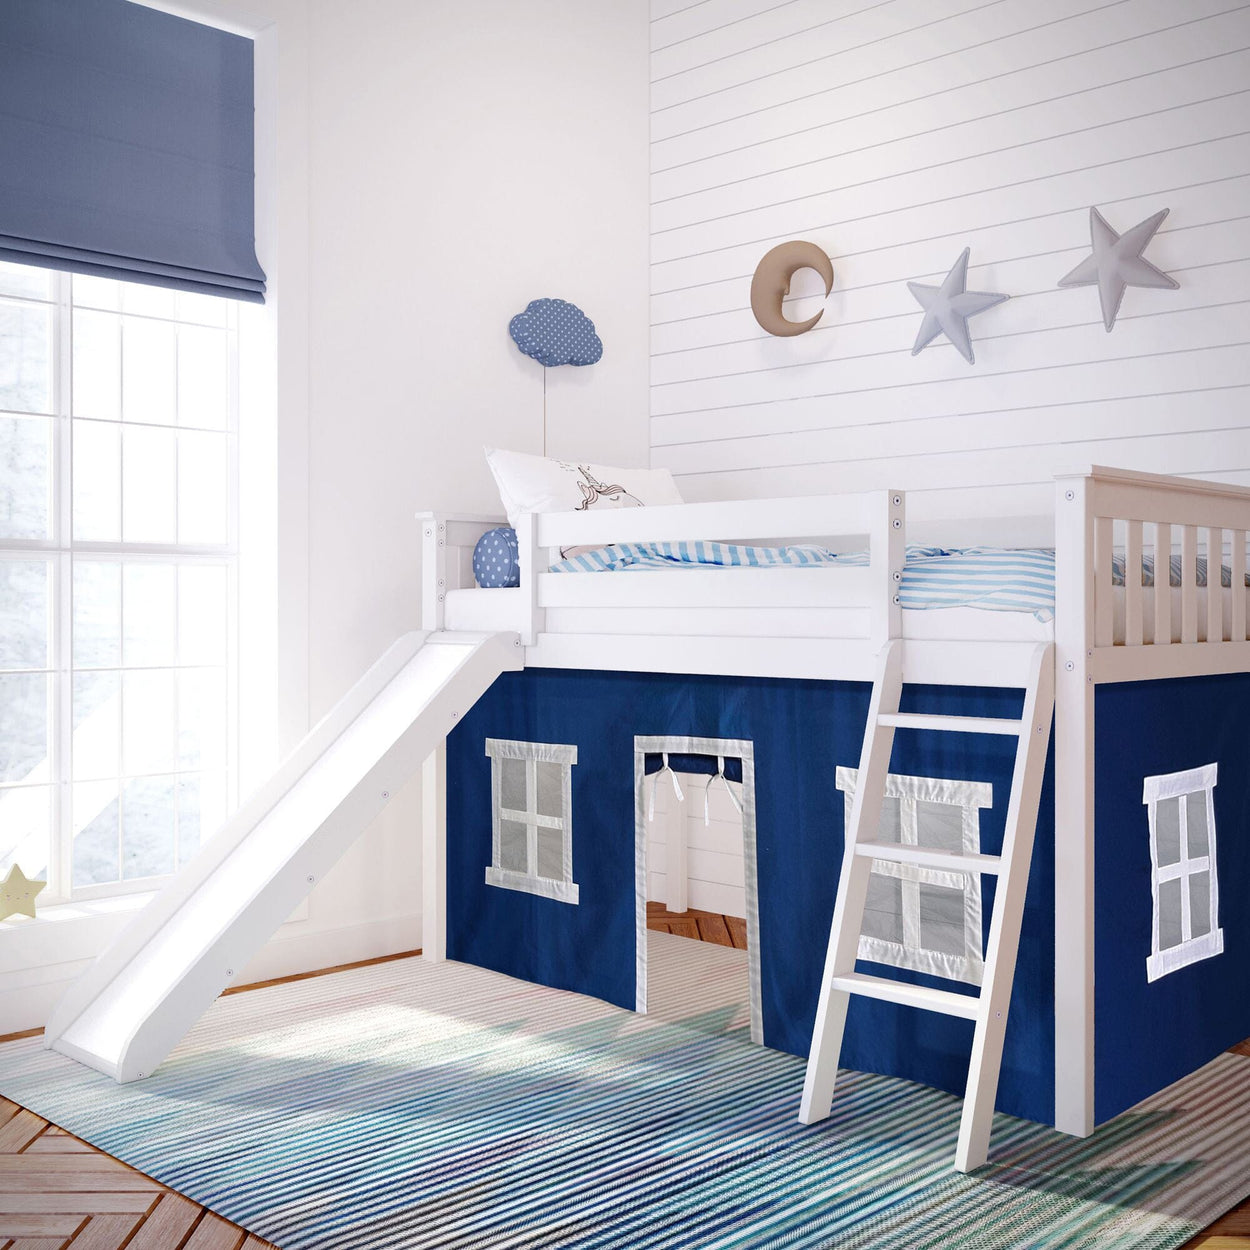 -180213002022 : Loft Beds Twin Low Loft With Slide & Blue Curtains, White